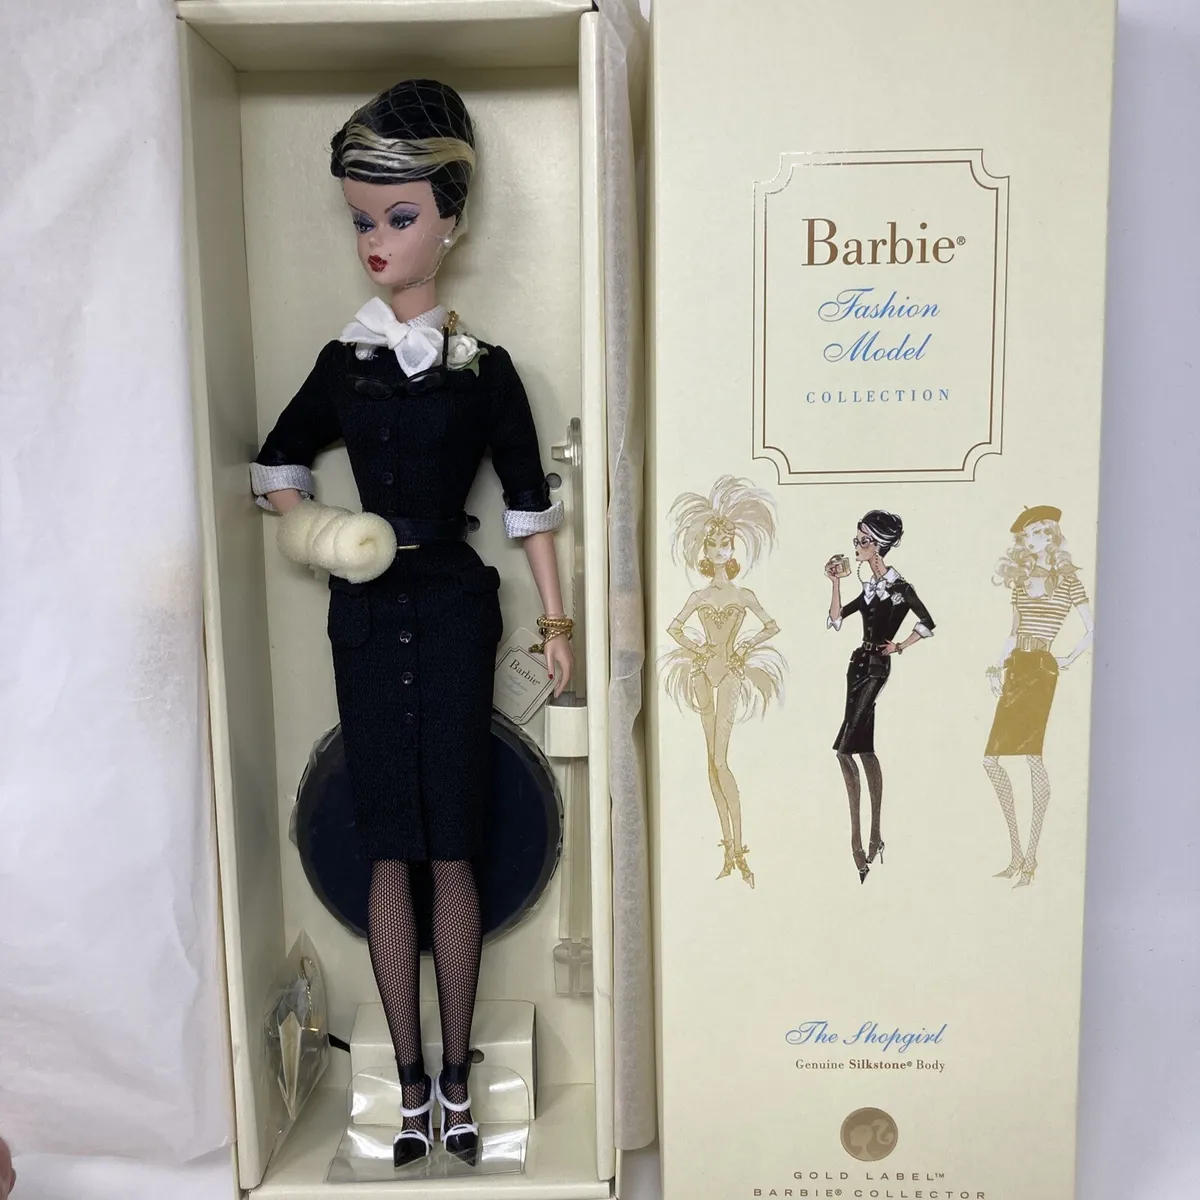 Barbie Fashion Model Collection The Shopgirl Silkstone Gold Label M4971  NRFB!